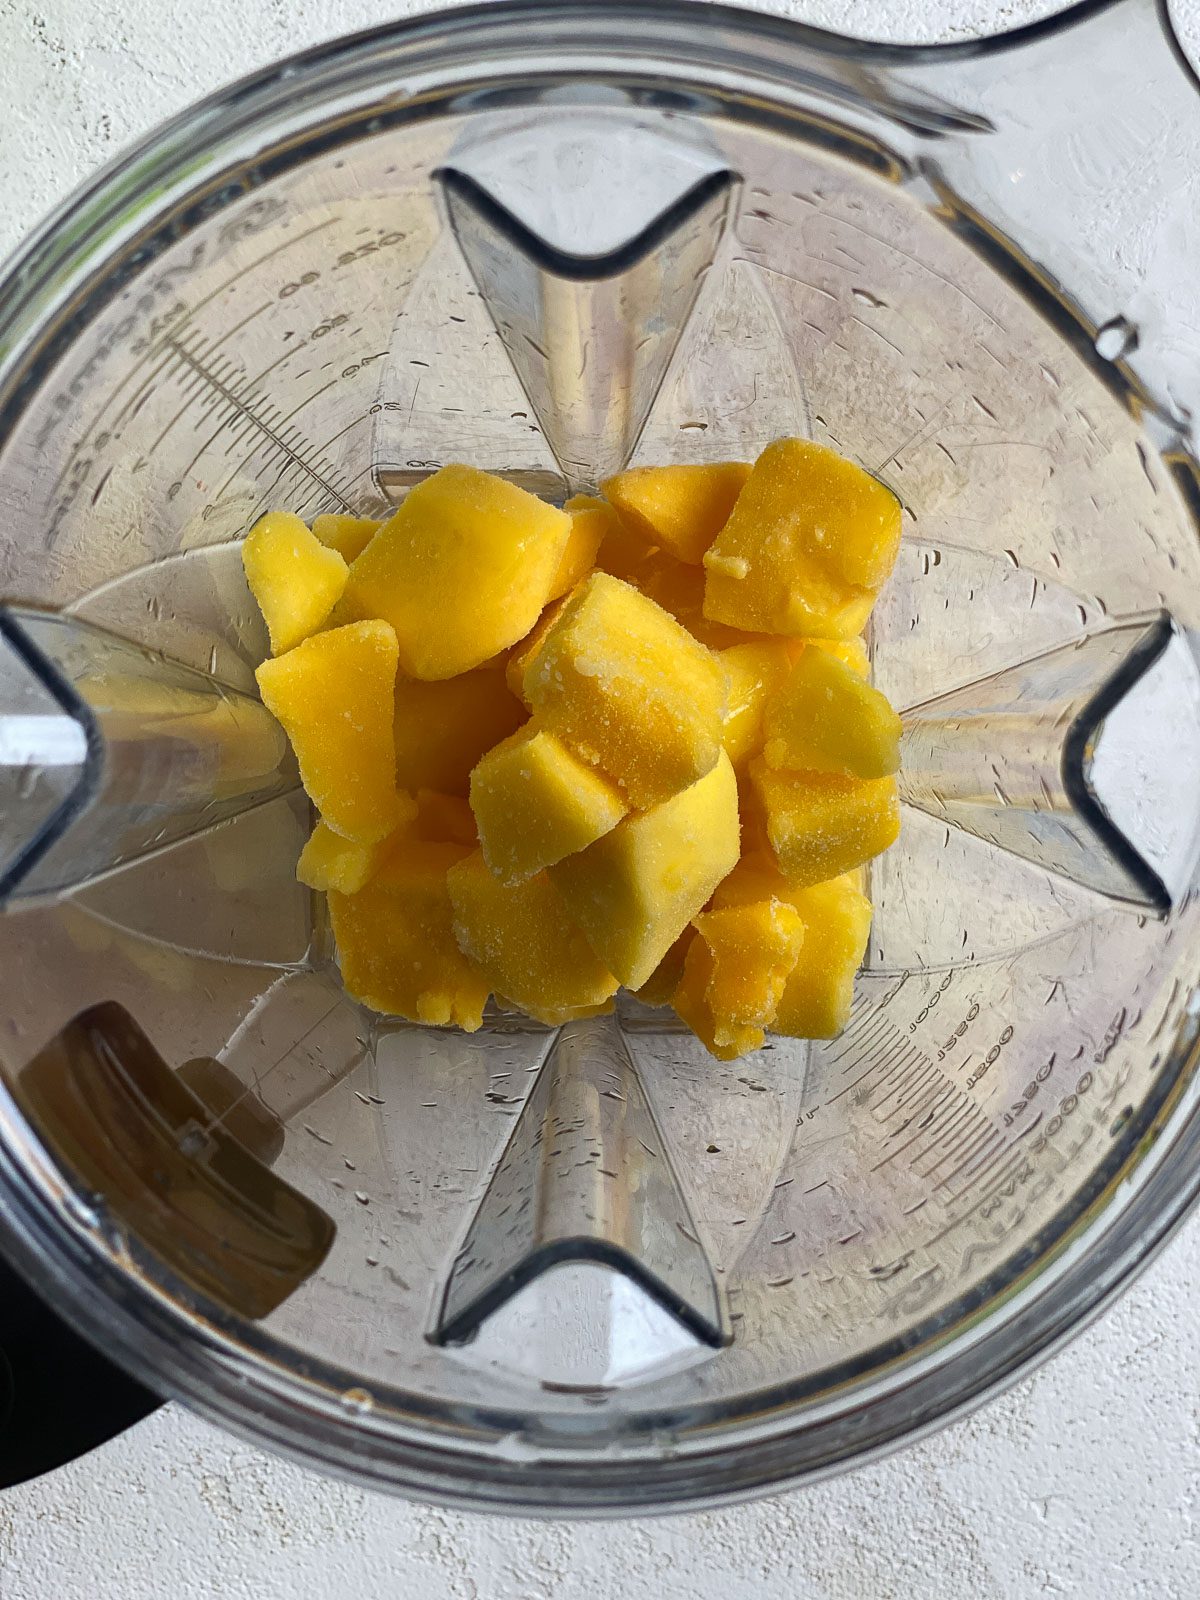 process of adding mangos to food processor